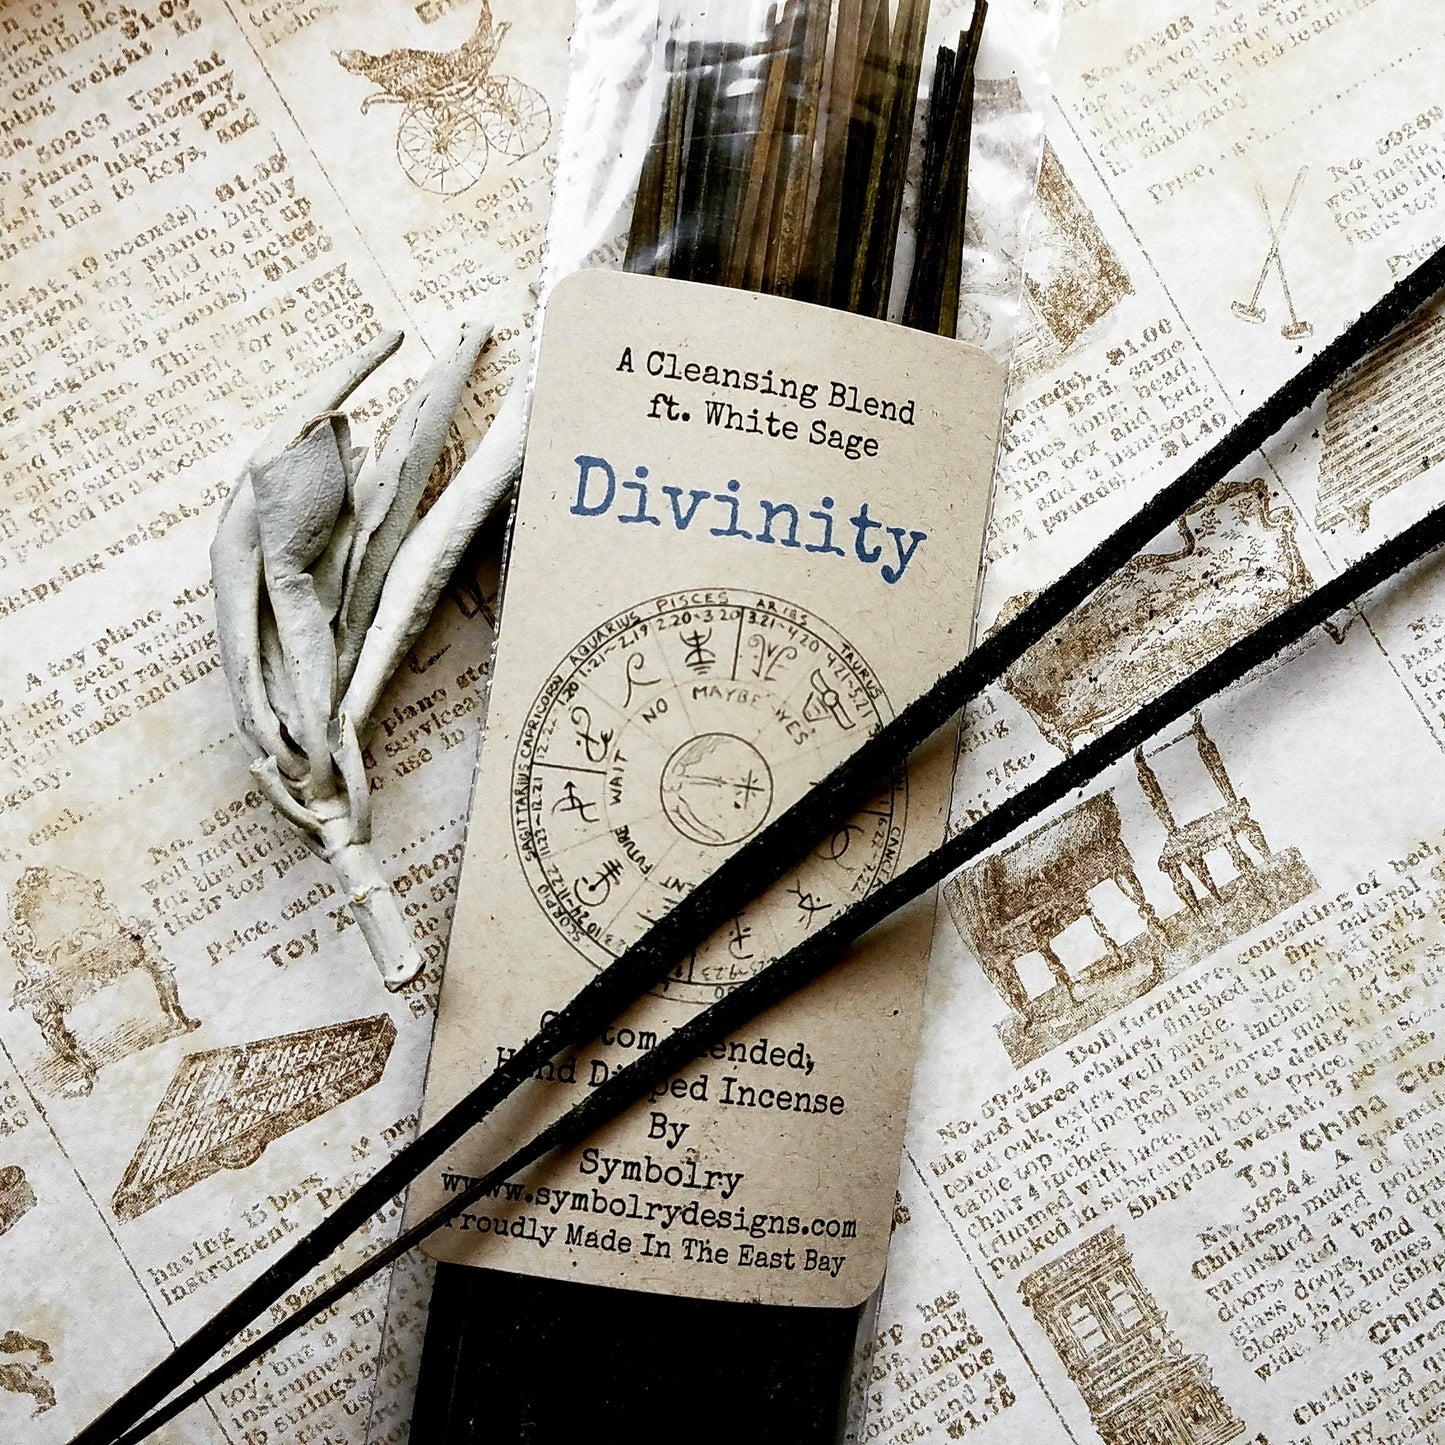 Divinity - custom blend of white sage, sandalwood, and herbs